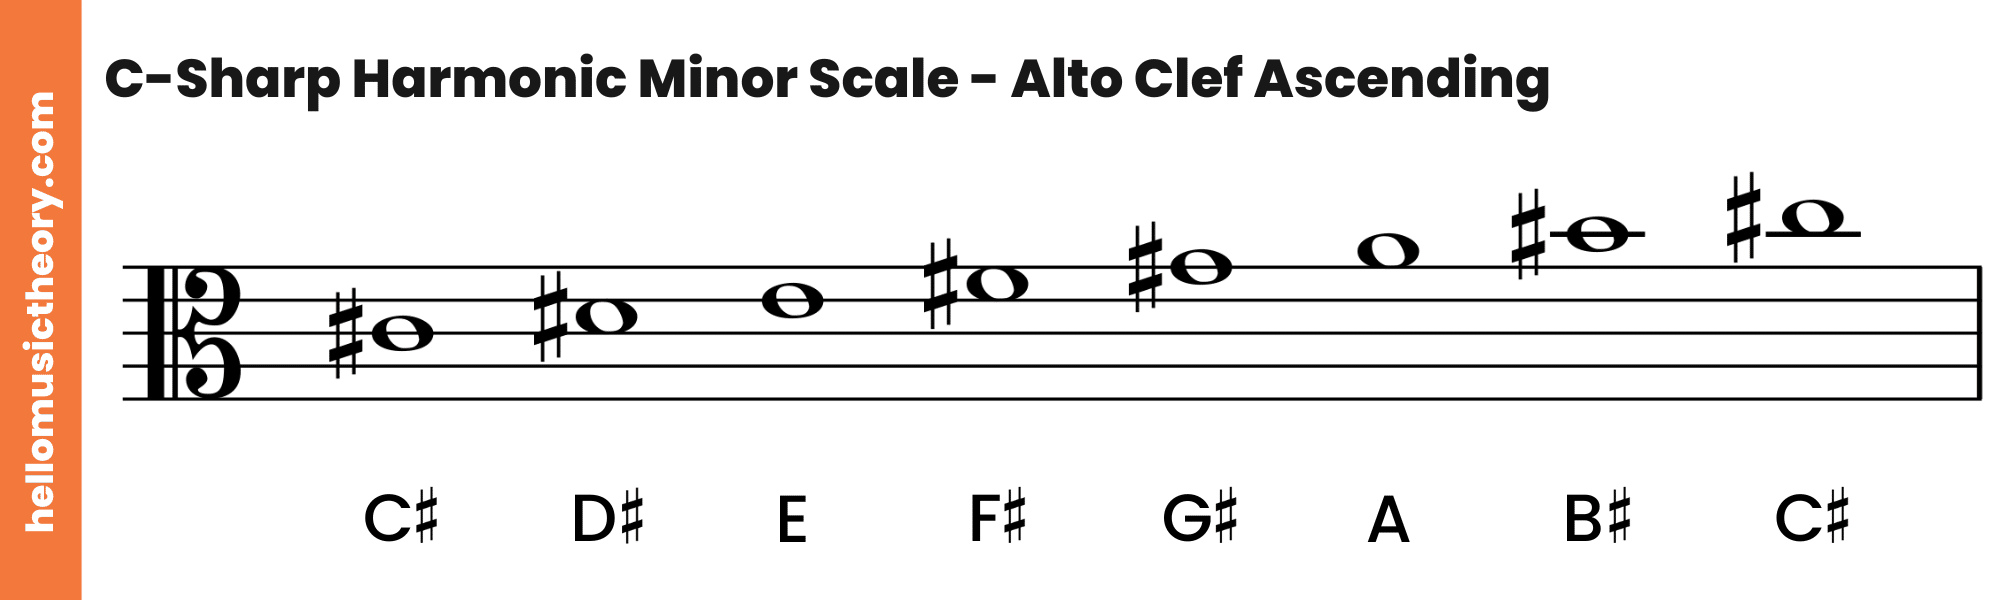 C-Sharp Harmonic Minor Scale Alto Clef Ascending